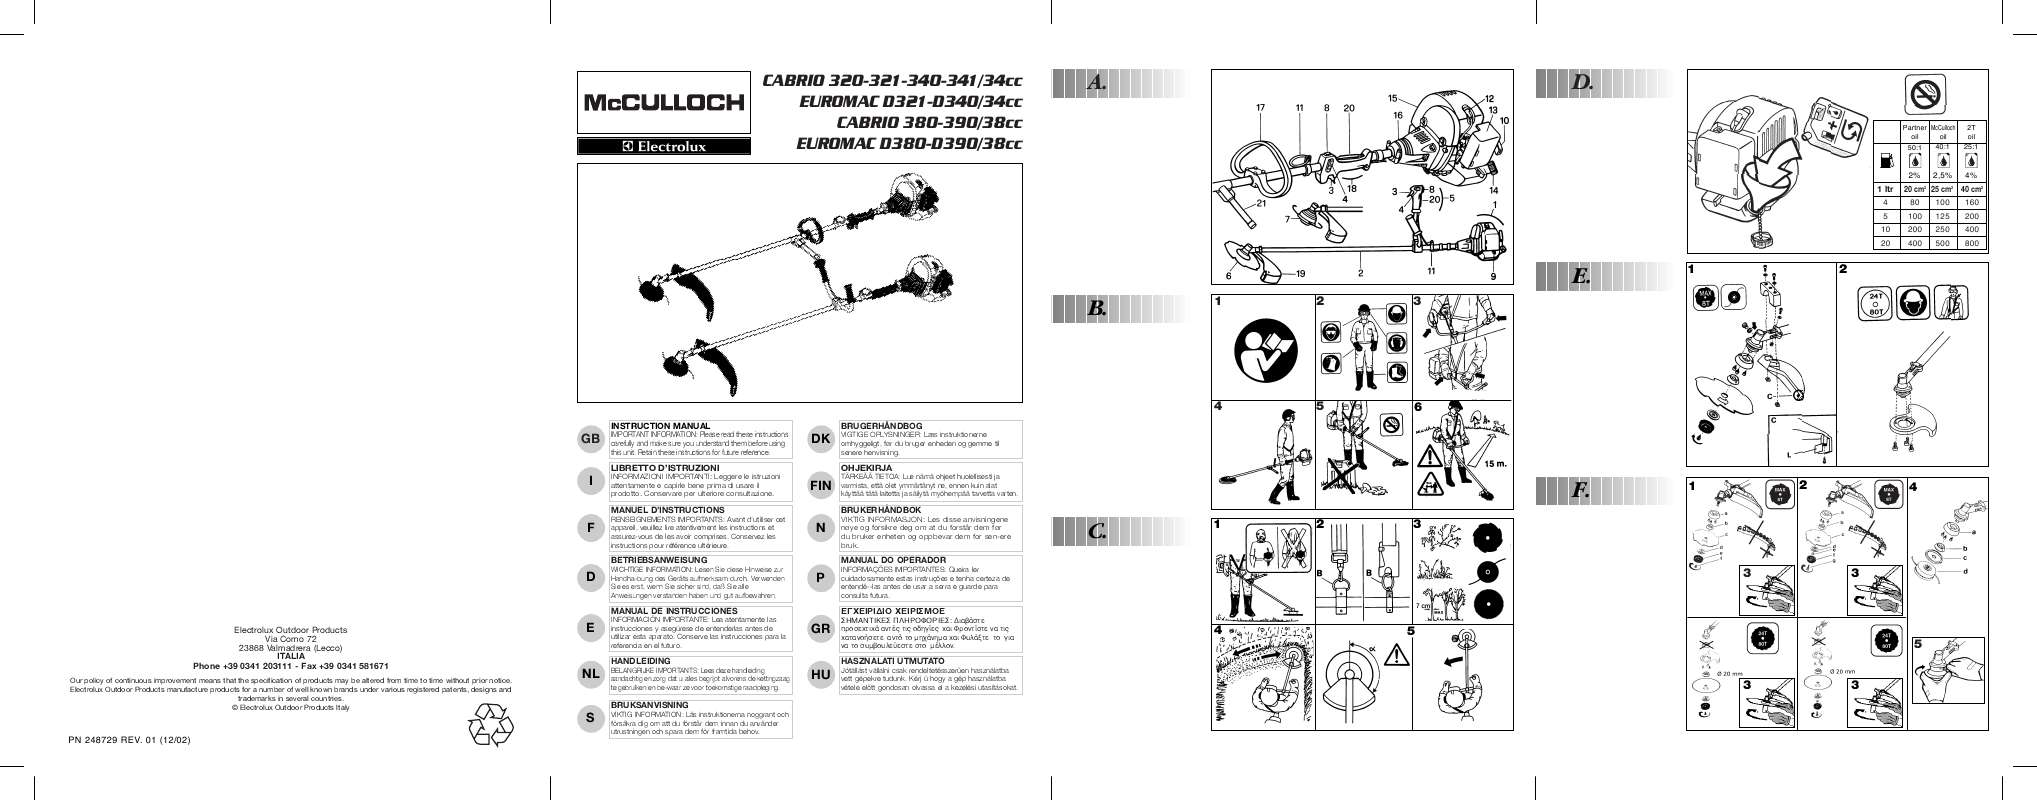 Guide utilisation  MCCULLOCH CABRIO 390-38CC  de la marque MCCULLOCH